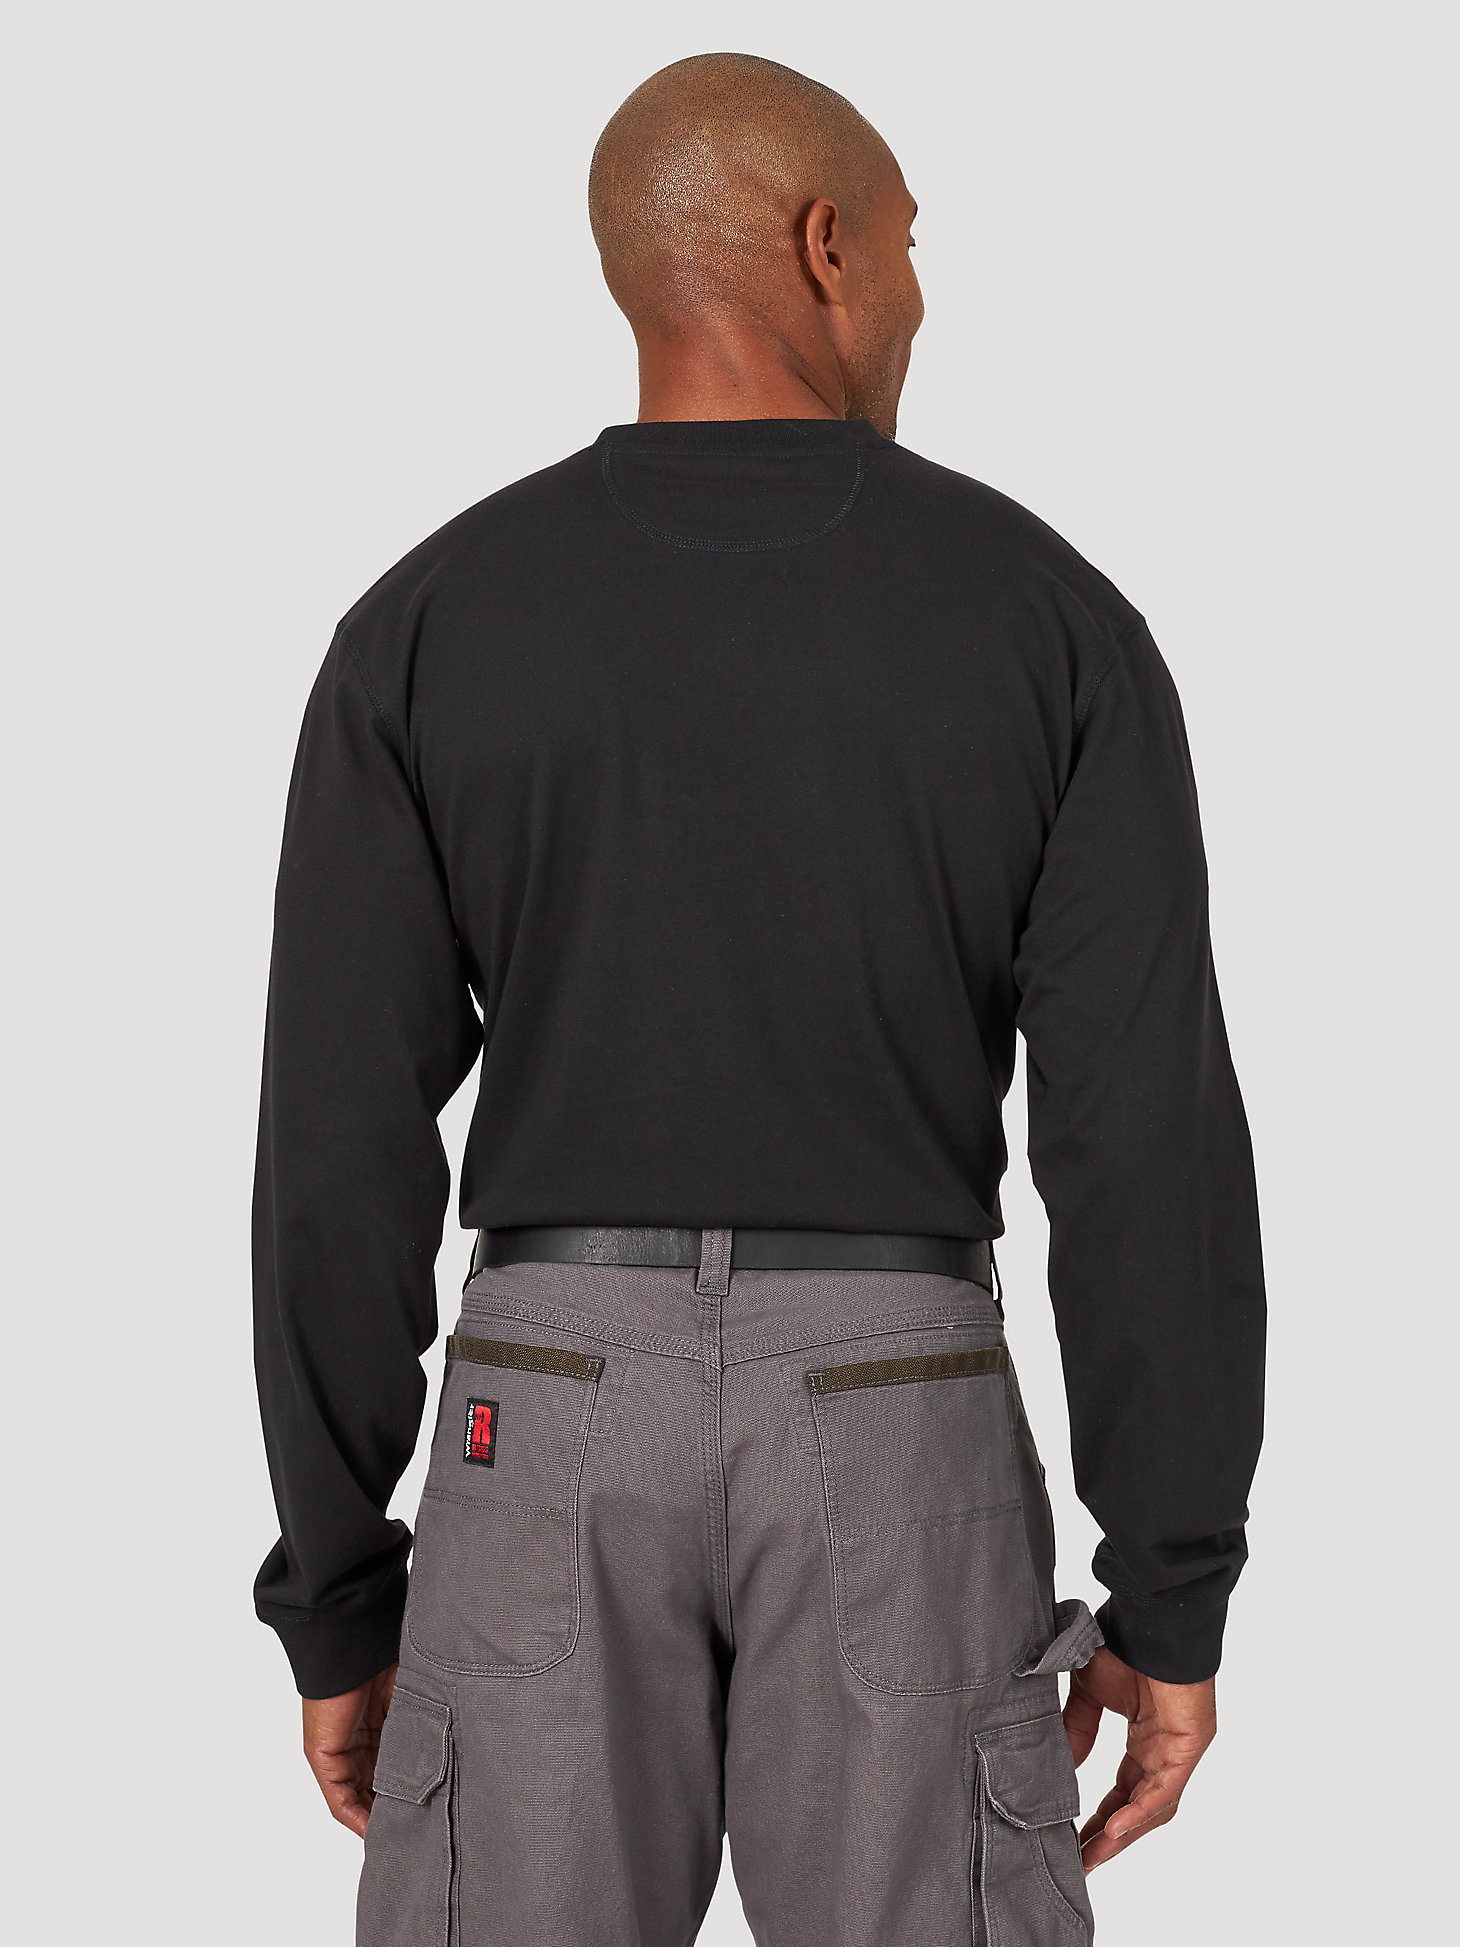 Wrangler Riggs Workwear Men's Long Sleeve Pocket T-Shirt 